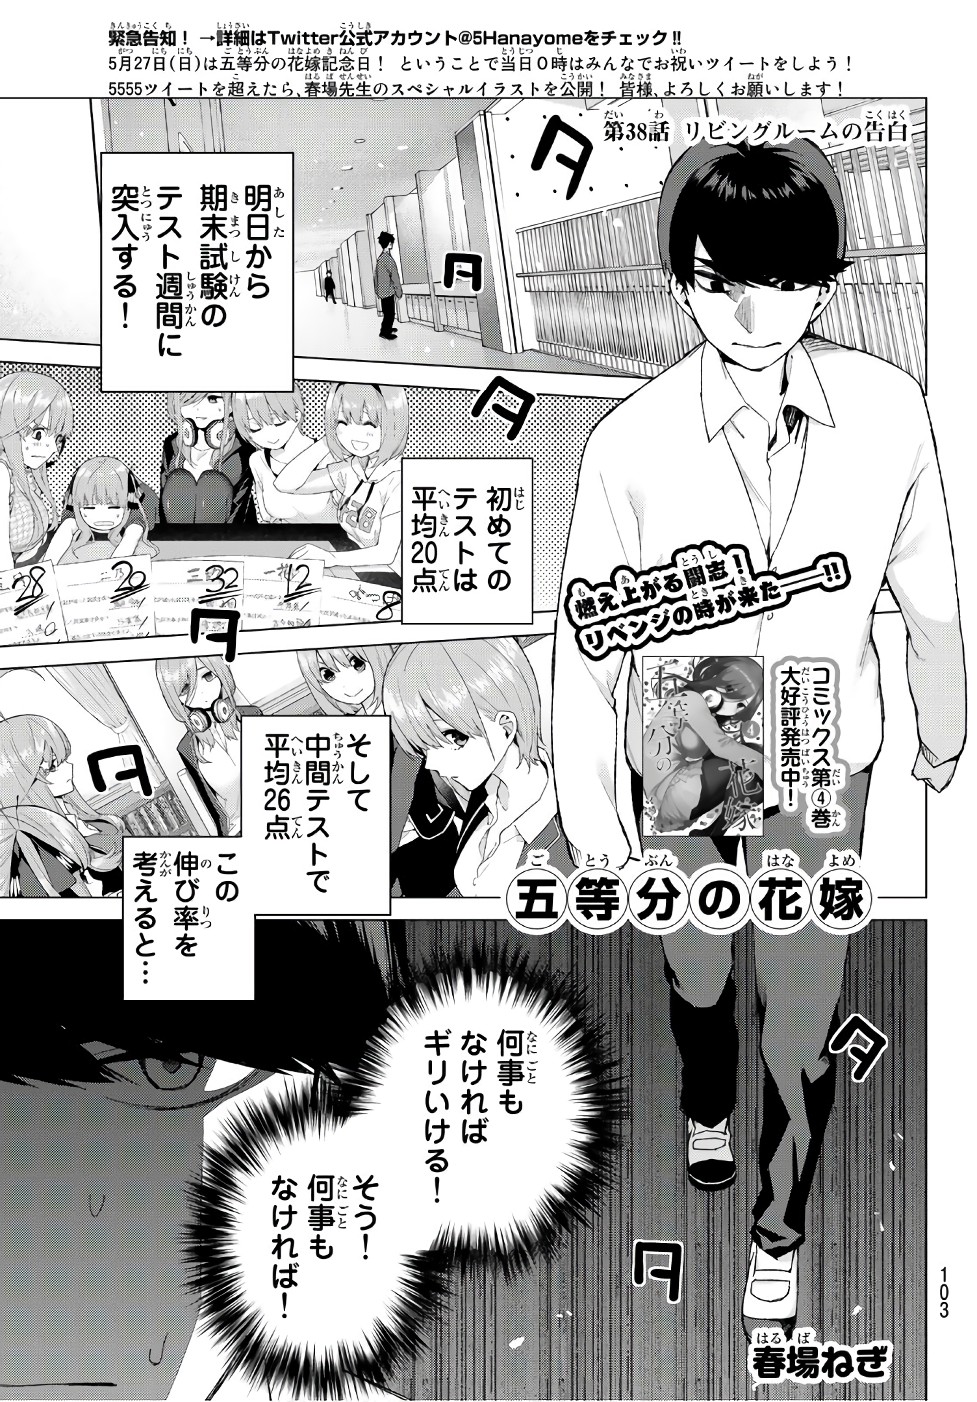 Read 5Toubun No Hanayome - I Woke Up And The Quintuplets Were Acting Strange  (Doujinshi) 5 - Oni Scan